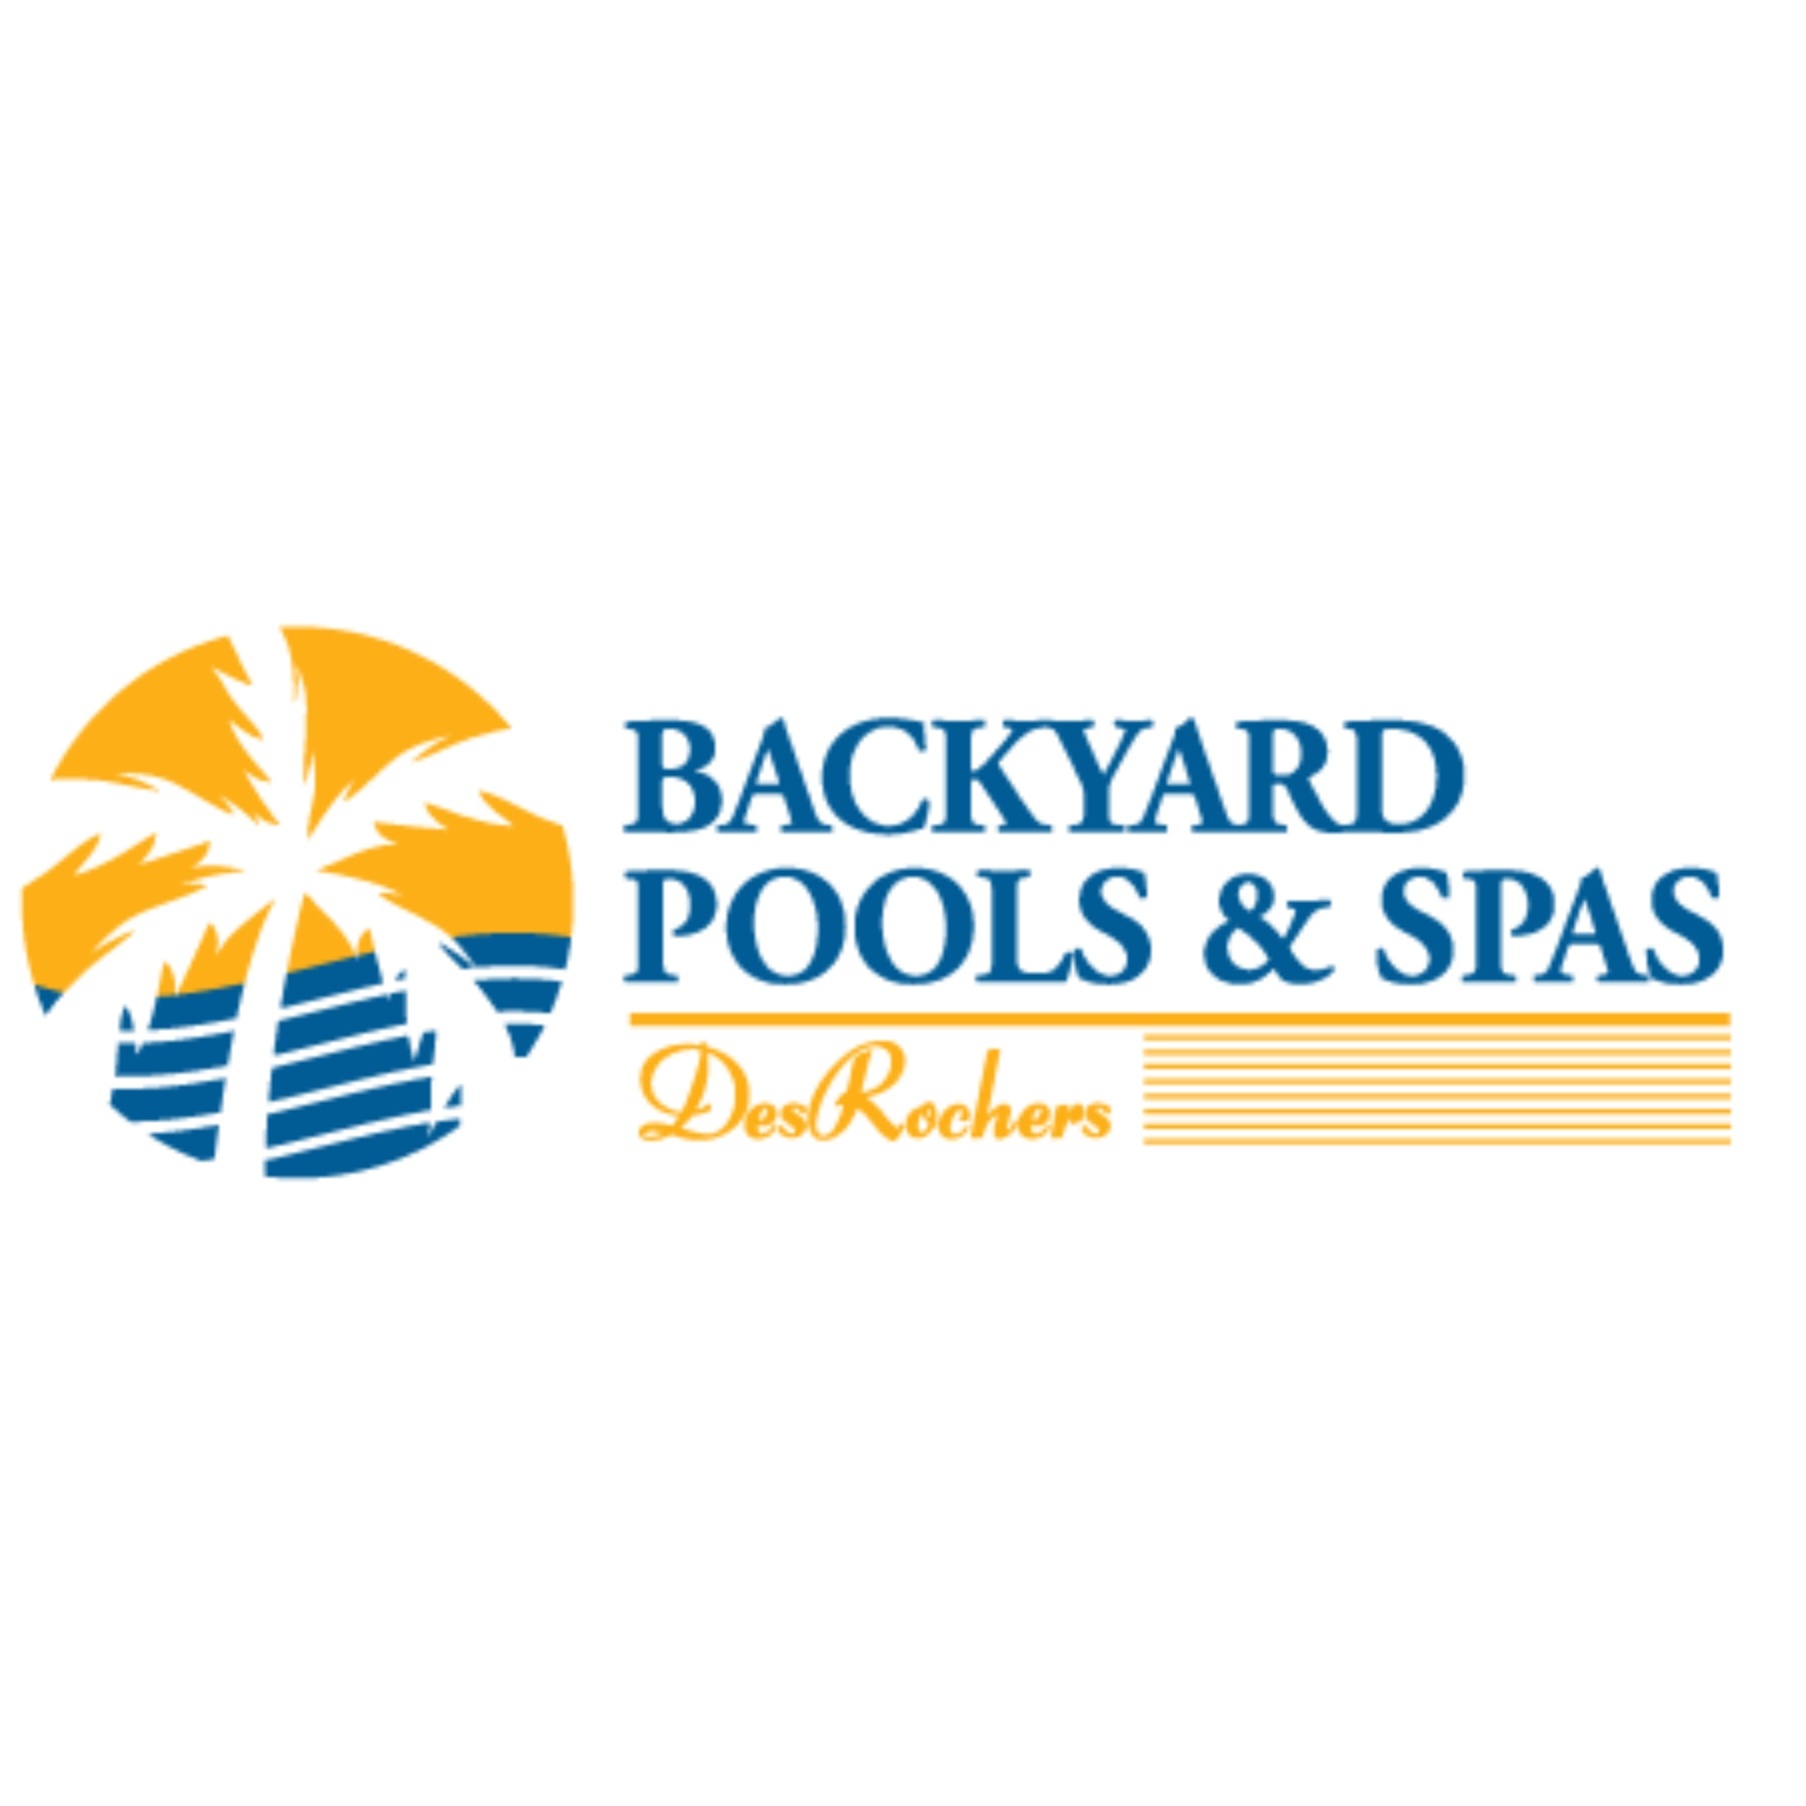 DesRochers Backyard Pools & Spas 550 Davy Ln, Wilmington Illinois 60481